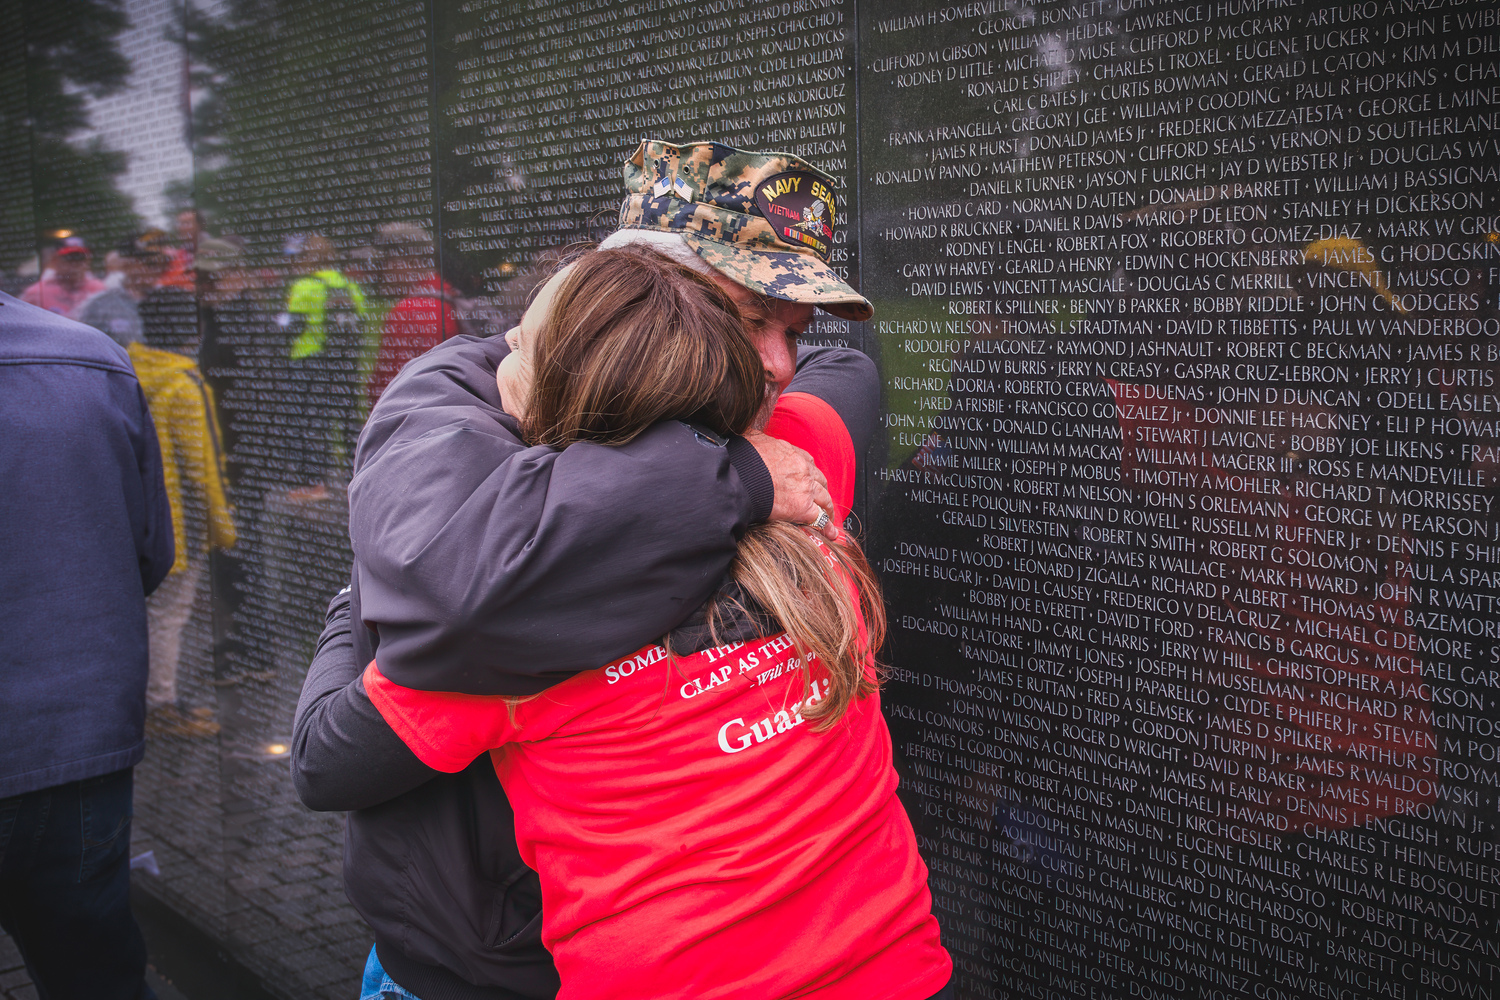 Vietnam veteran Thomas Coughlin embraces his daughter, Kate Caporusso, at the Vietnam Veterans Memorial in Washington, D.C. MARK CHAMBERLAIN